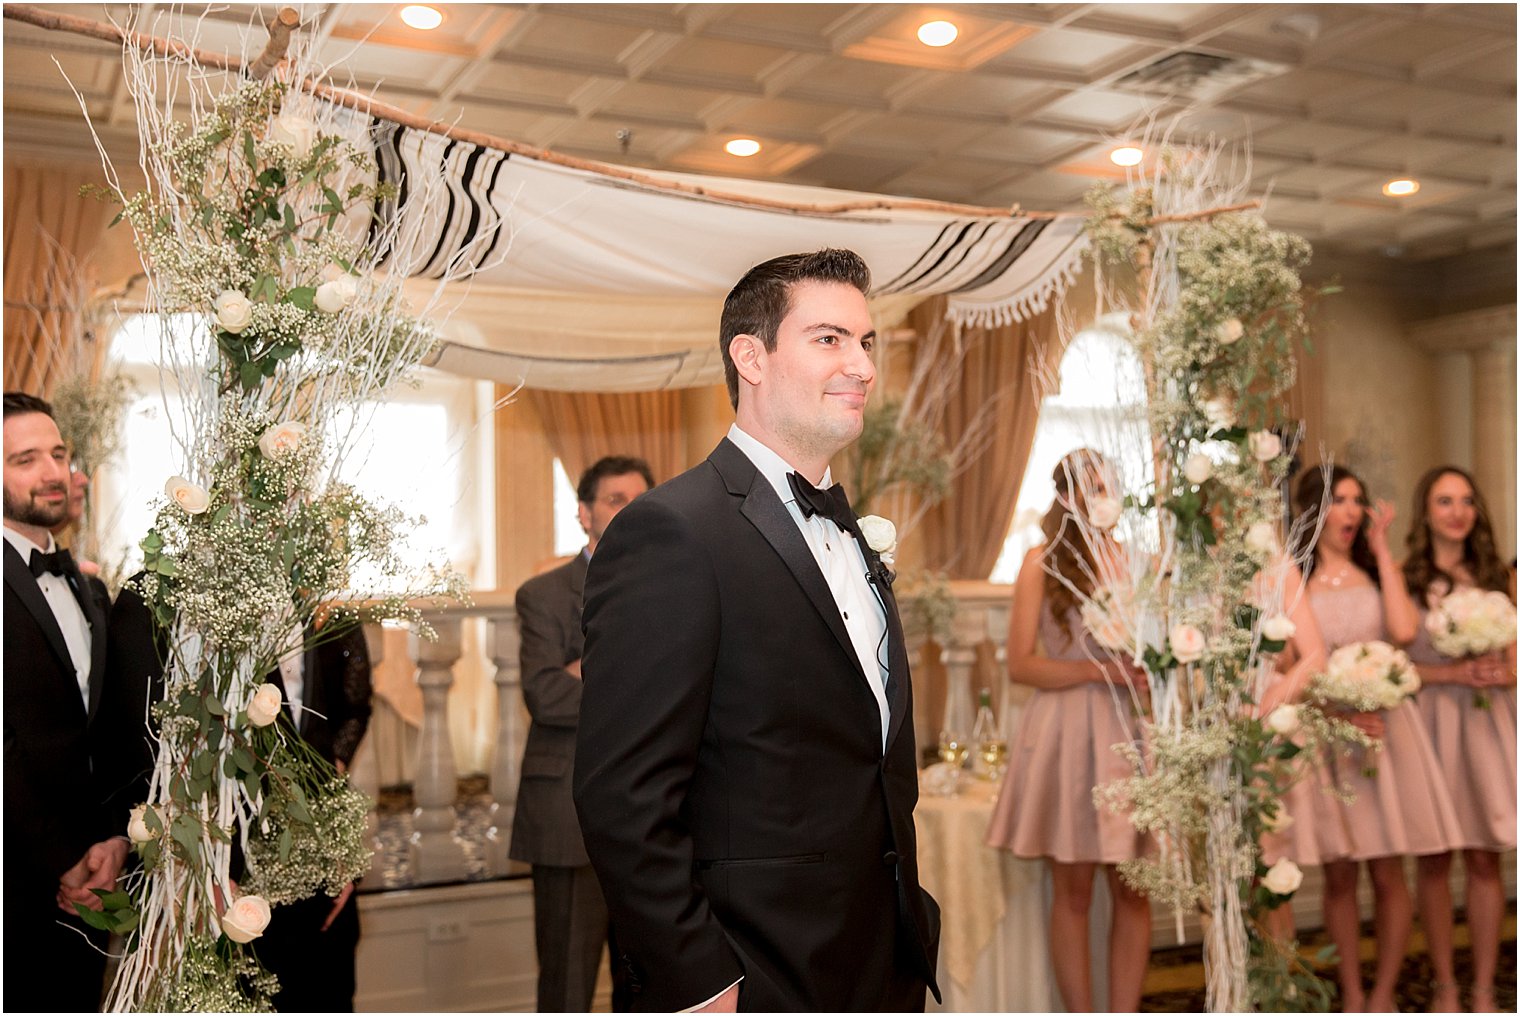 Groom's reaction during wedding ceremony | Photo by Idalia Photography